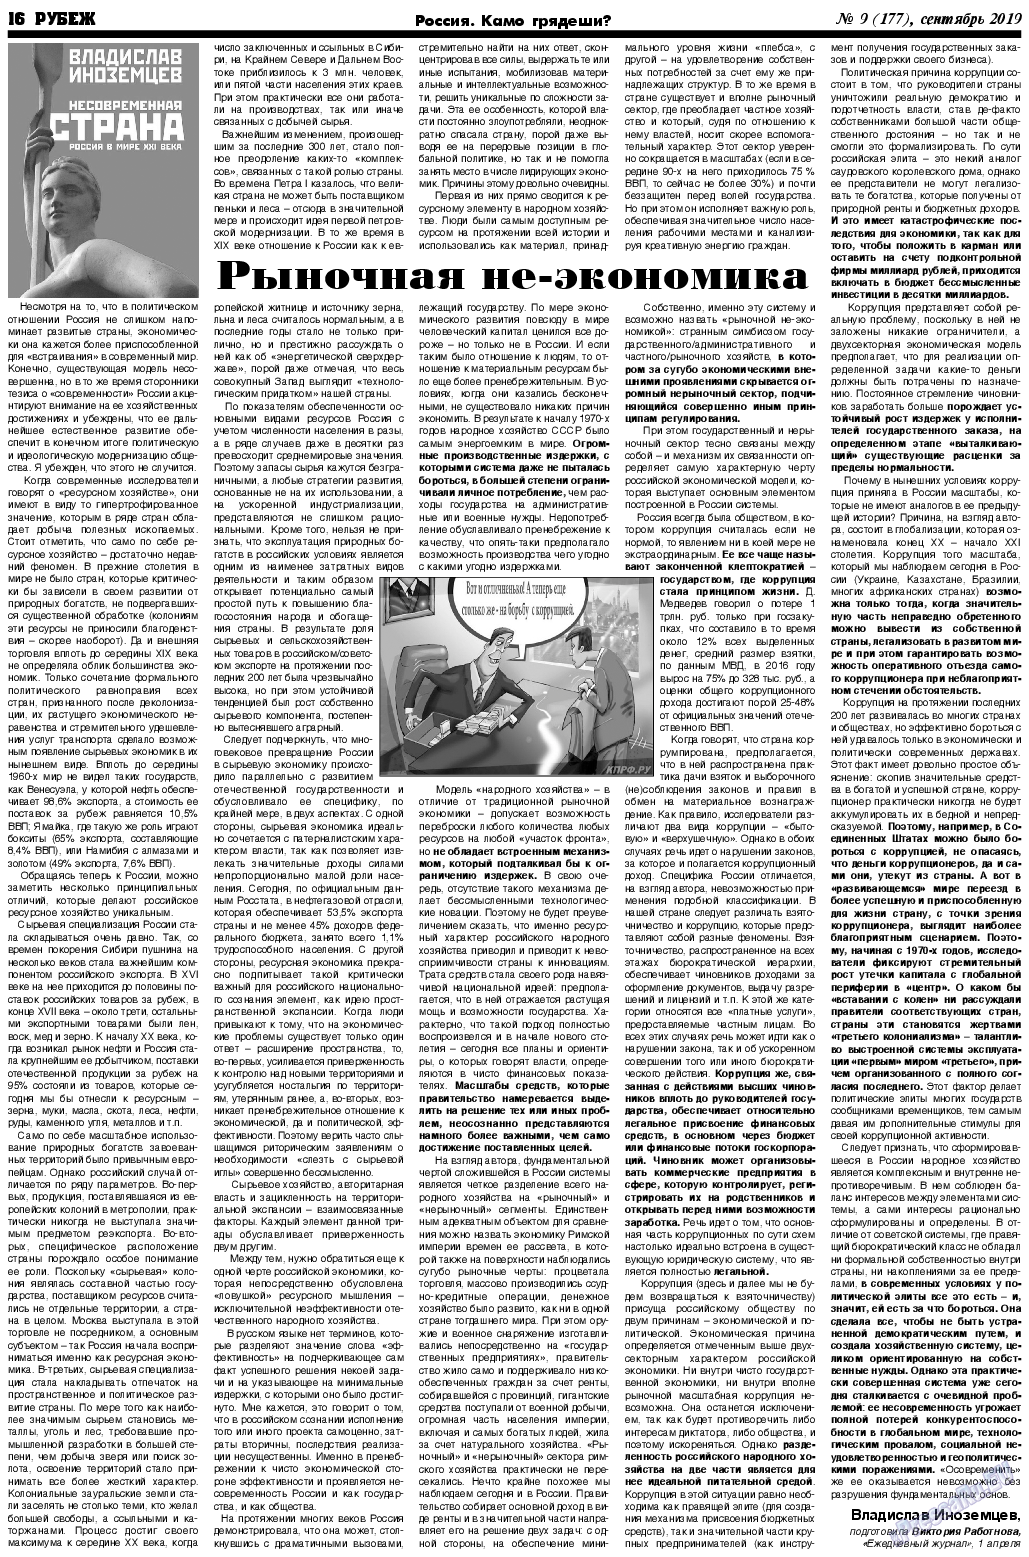 Рубеж, газета. 2019 №9 стр.16